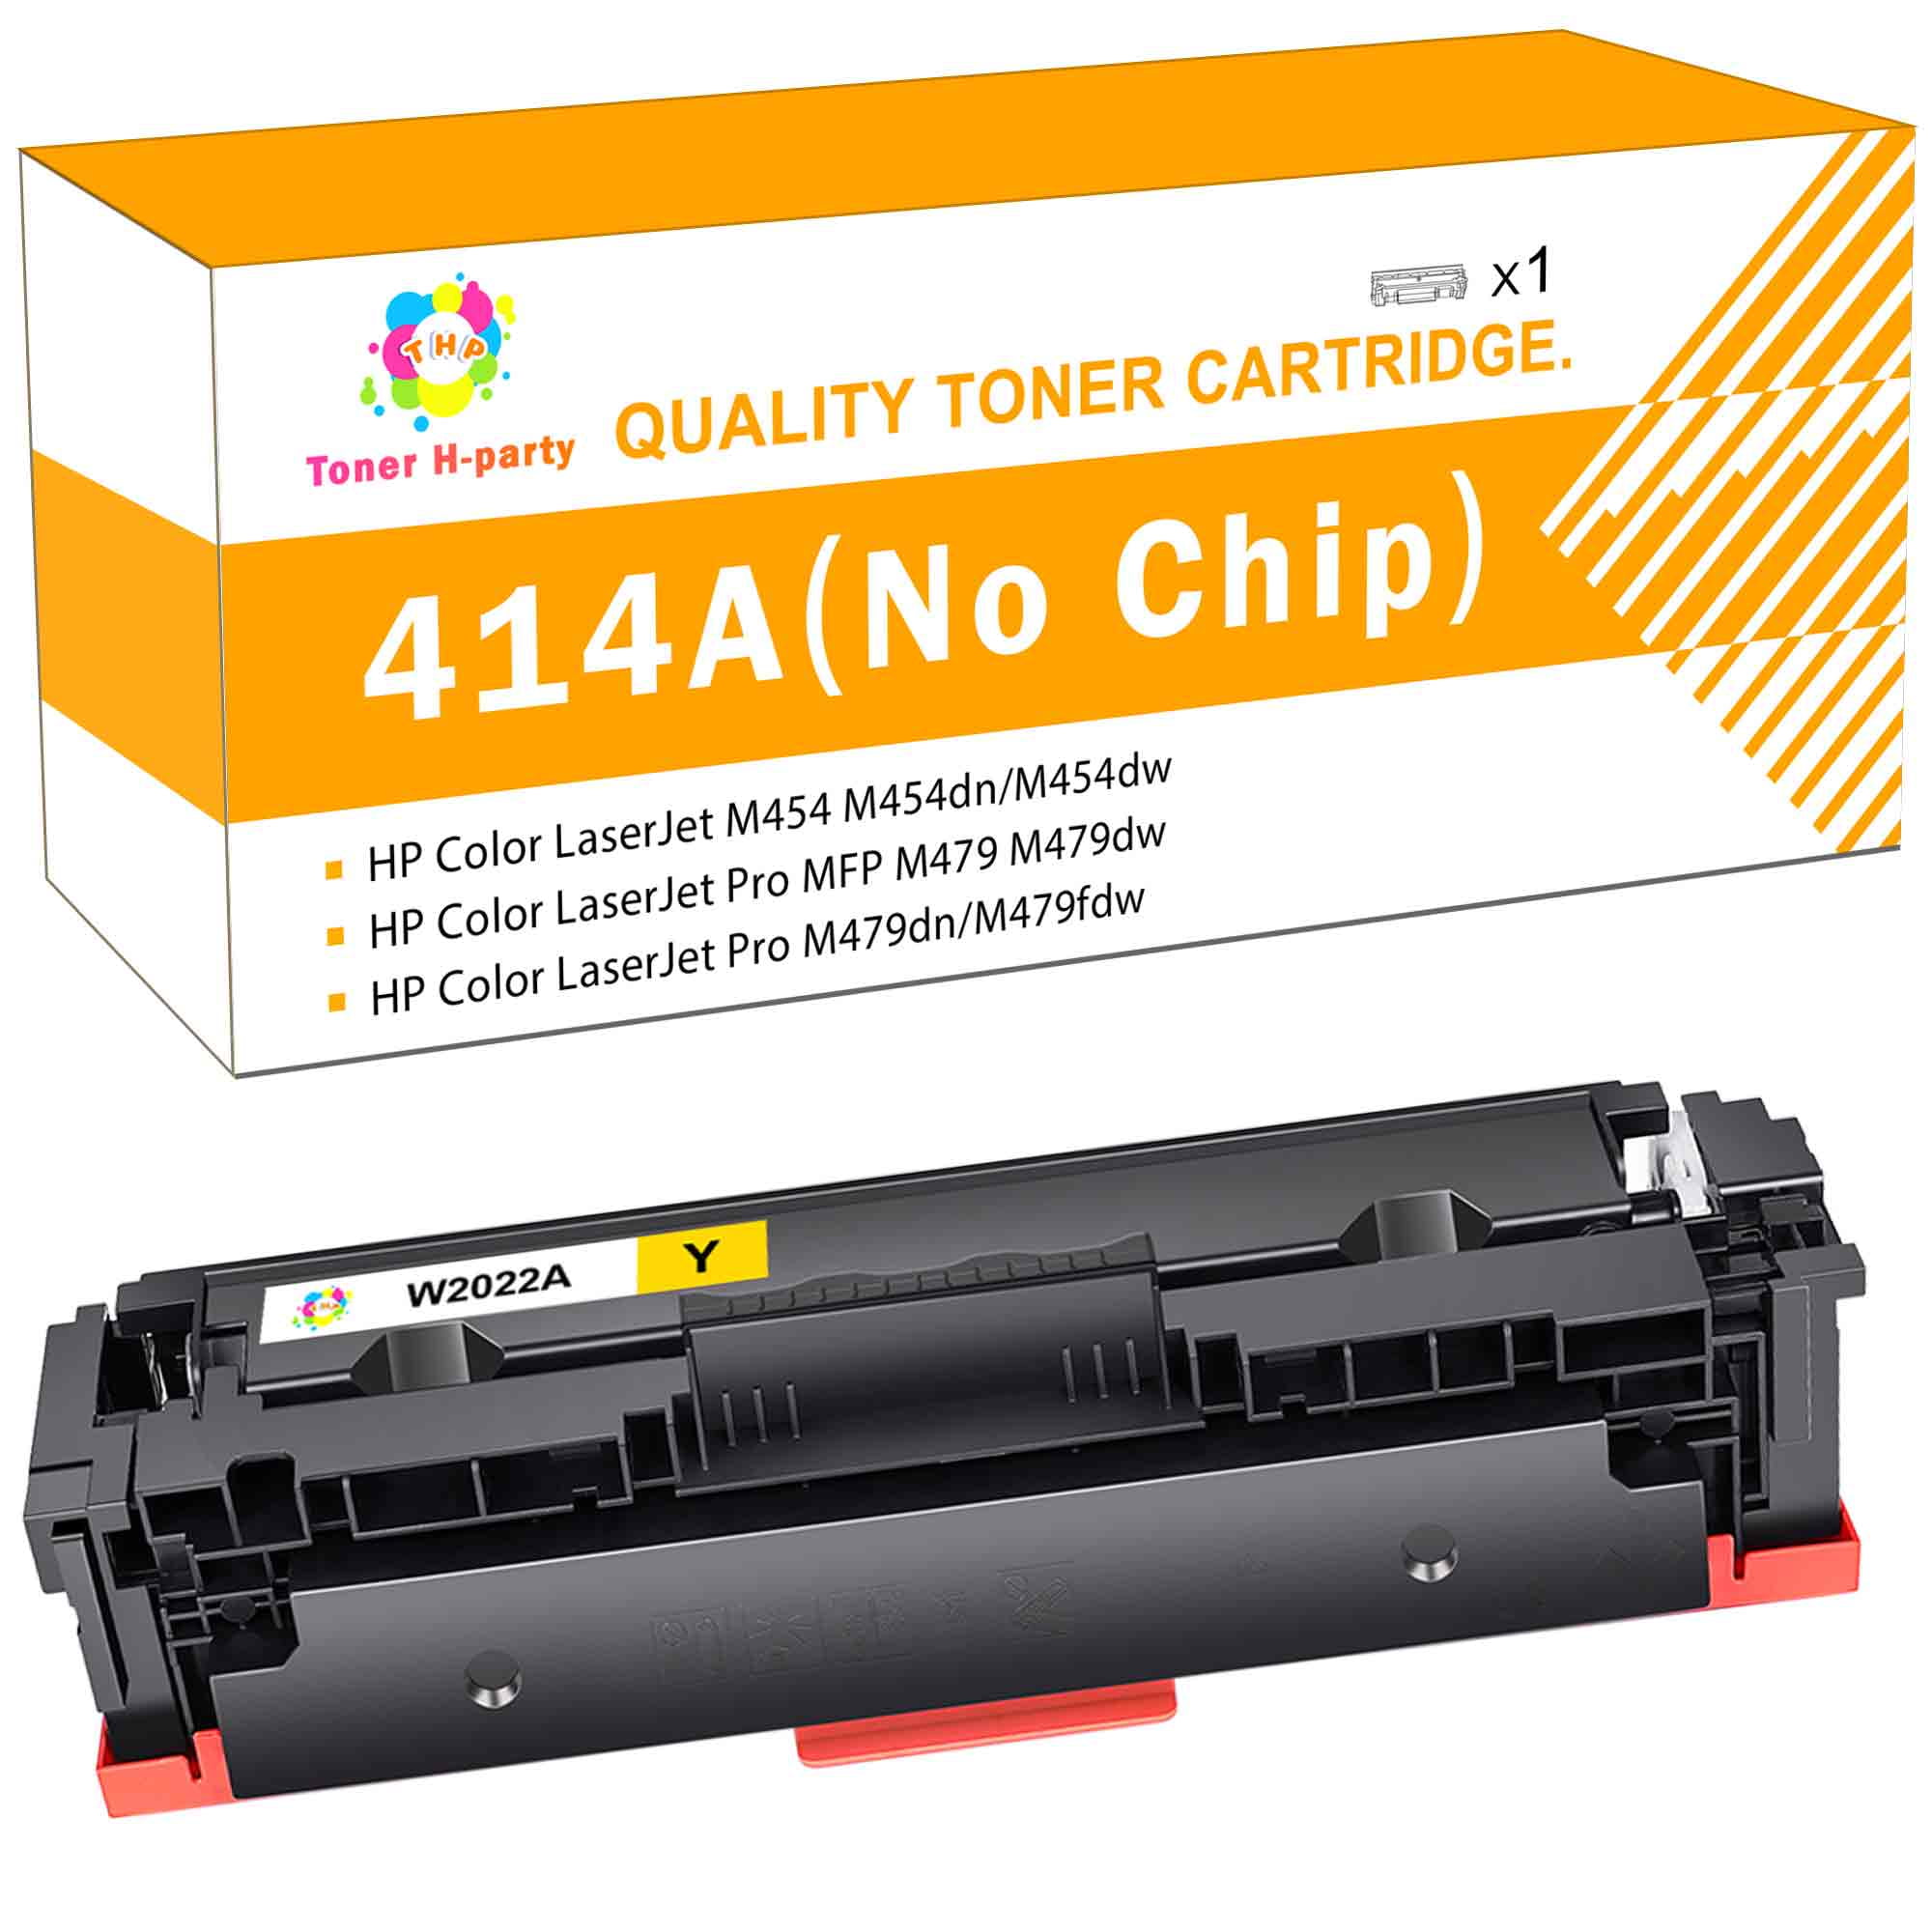 Toner H Party no chip 1-Pack Toner Cartridge for HP 414A W2022A Color Pro MFP M479fdw M454dw M479fdn M454dn M454 M479 Yellow - Walmart.com